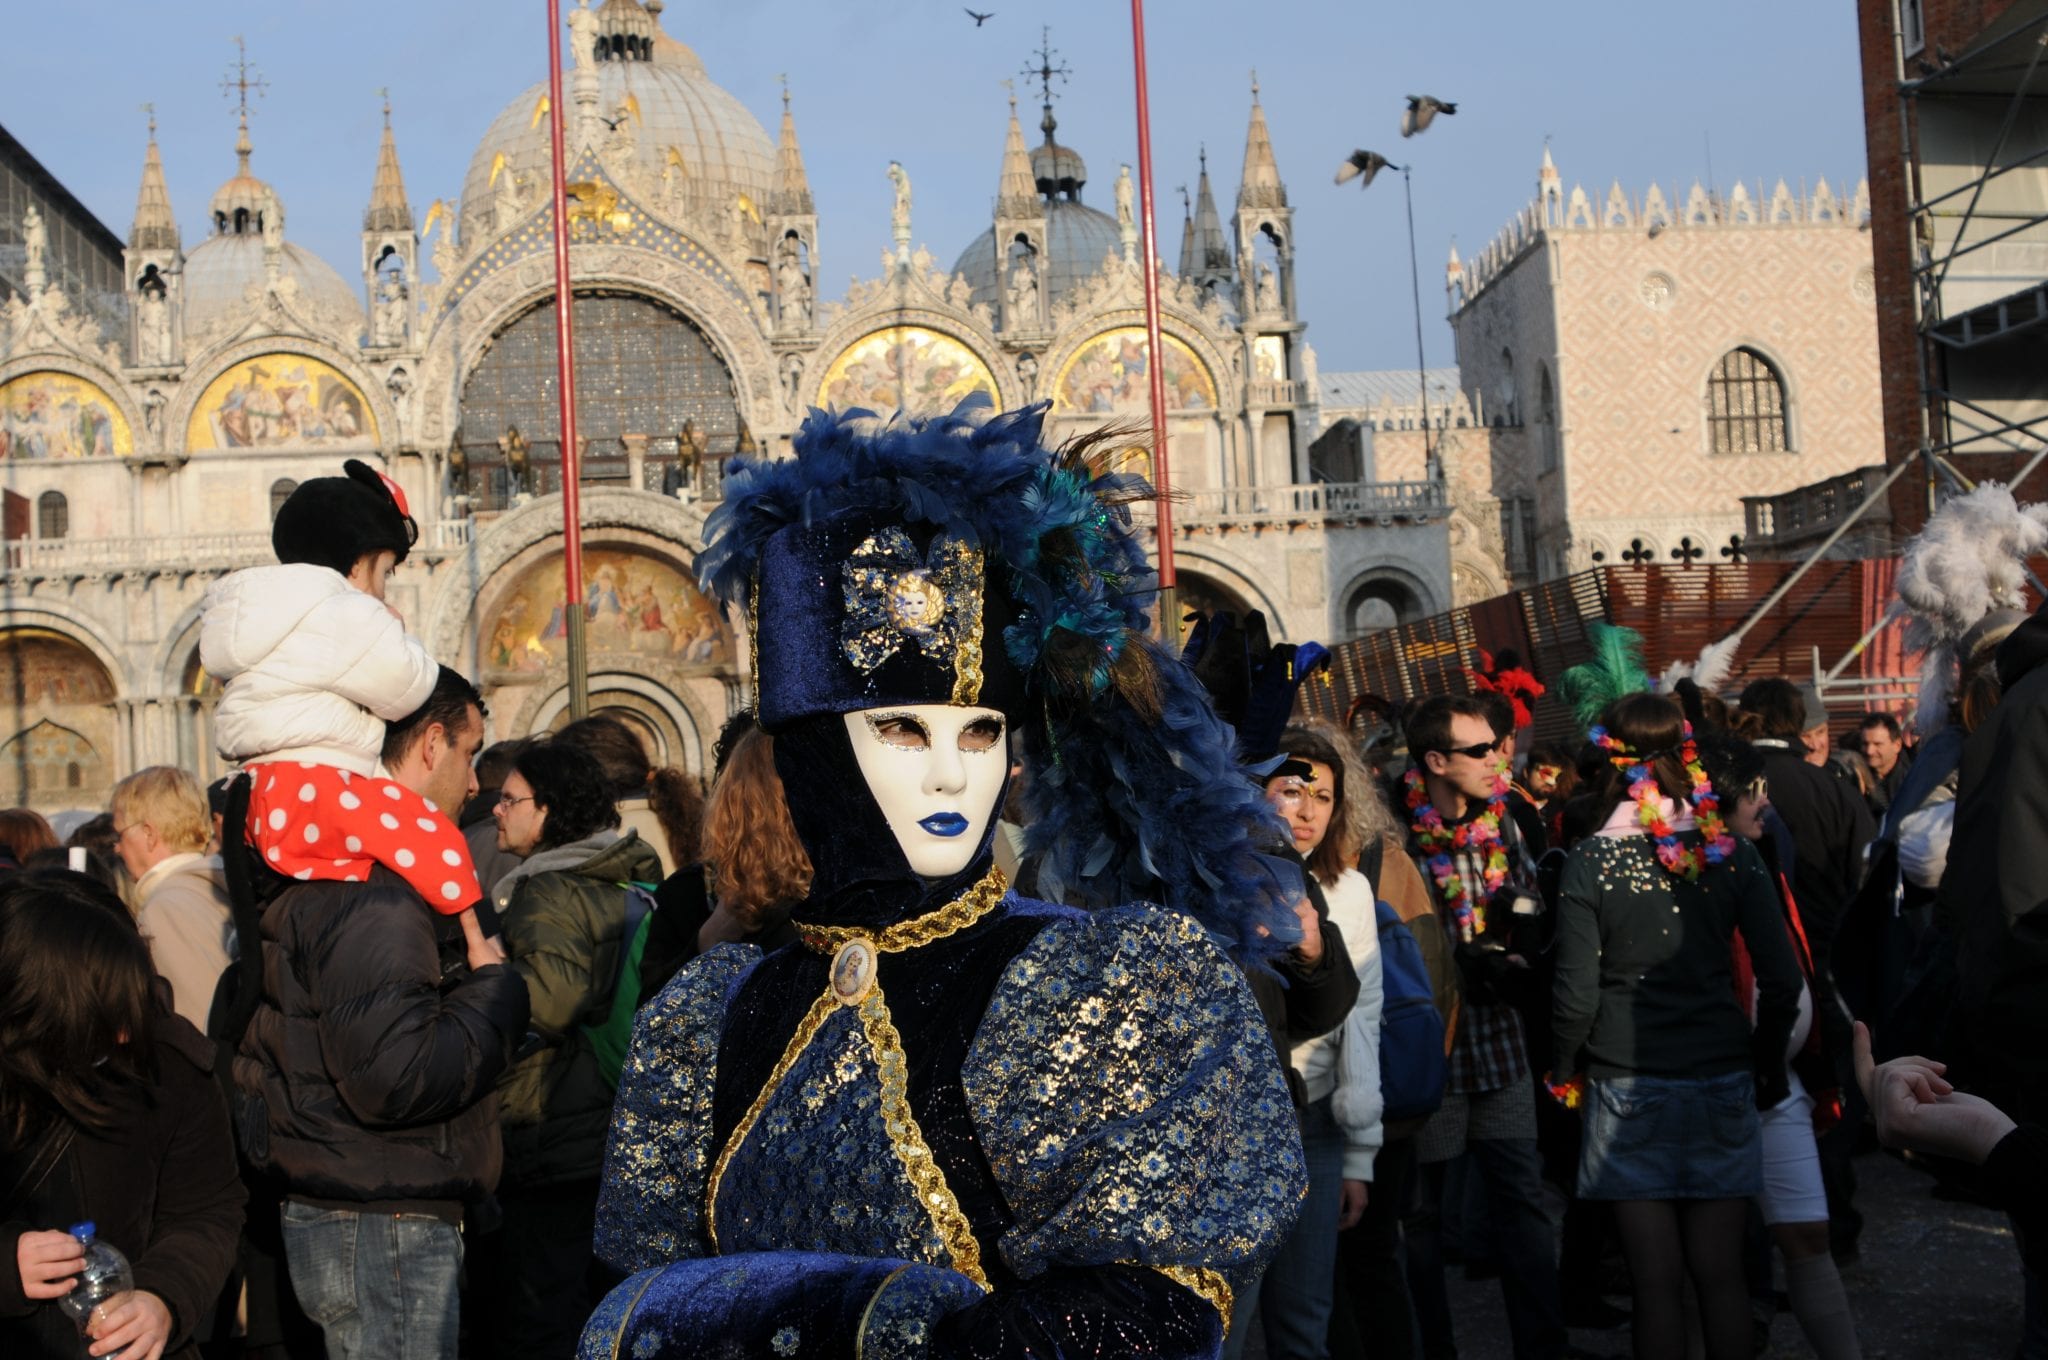 Carnaval  Venetian carnival masks, Venitian mask, Masks masquerade